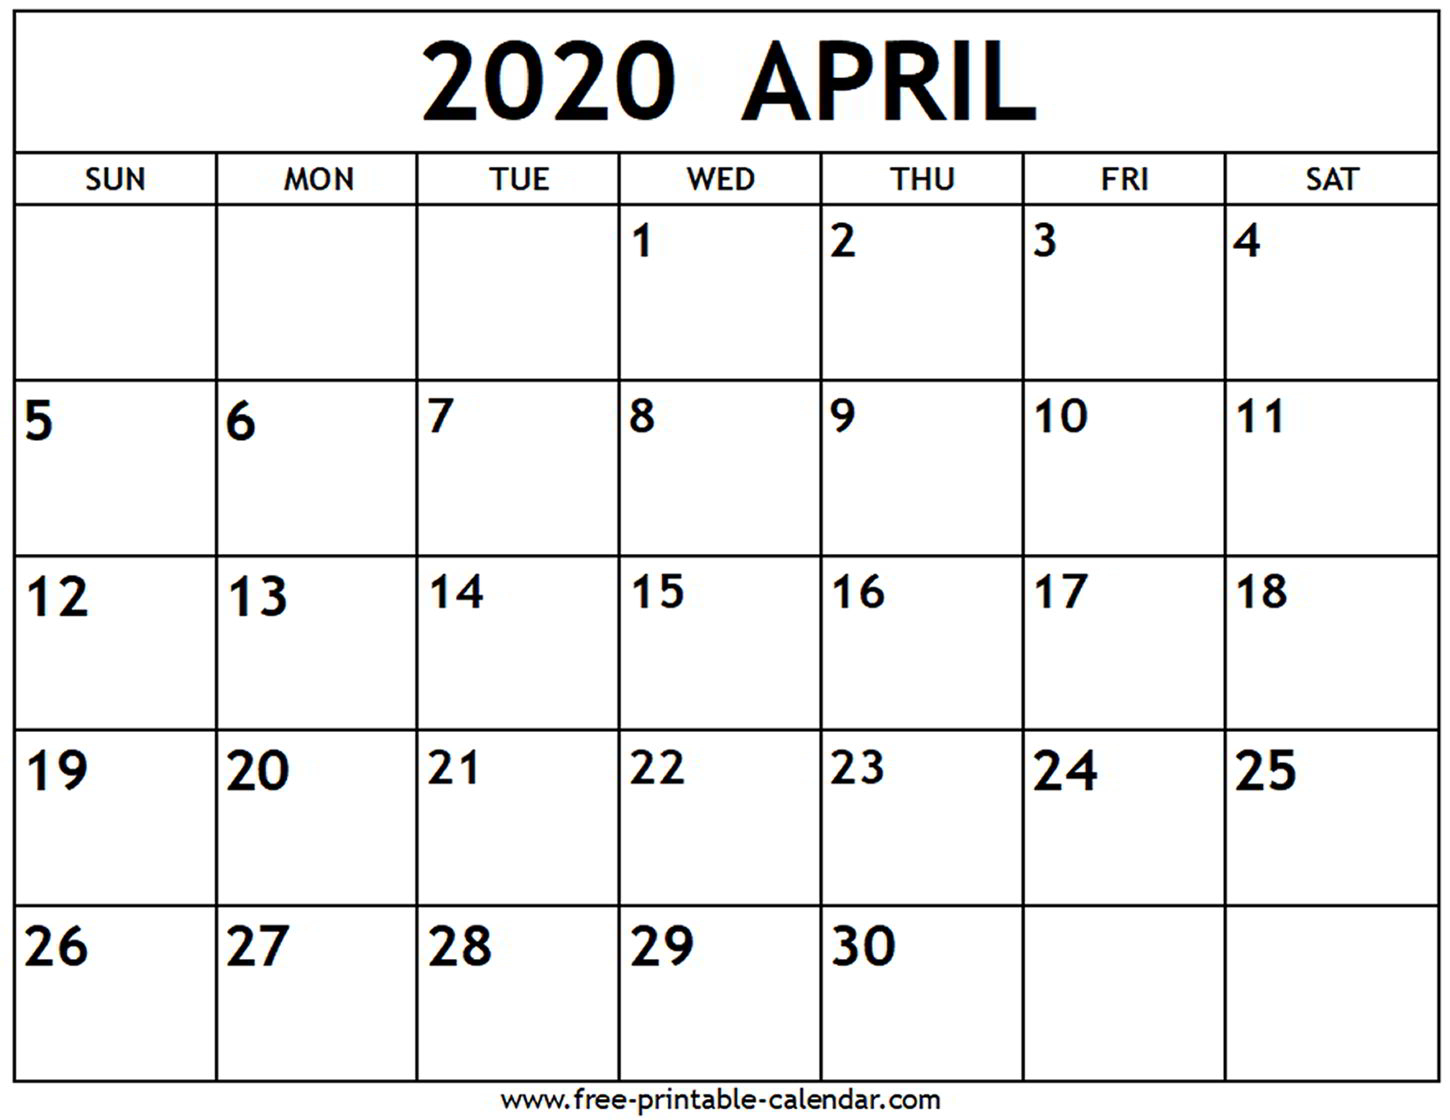 Free Printable Calendars April 2020 - Fitbo.wpart.co